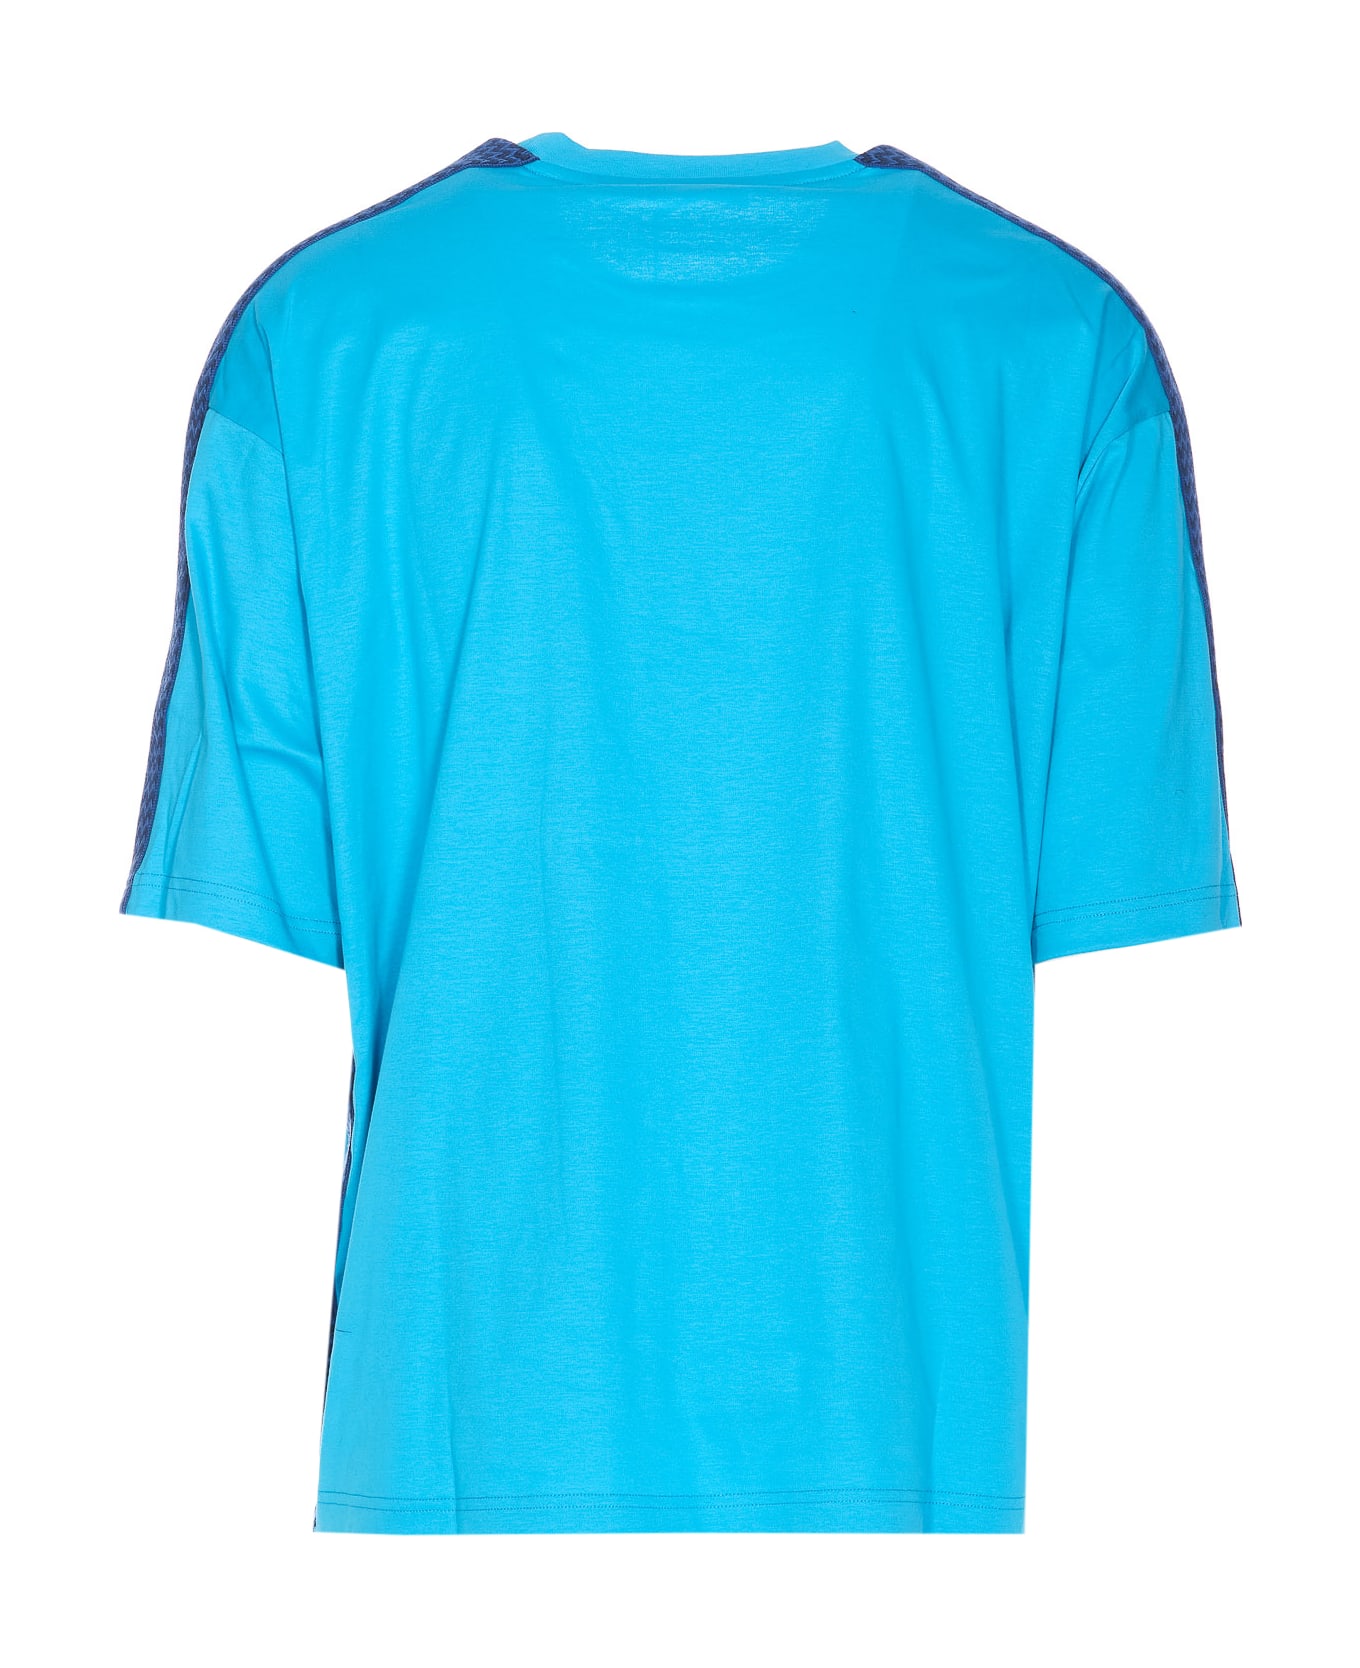 Lanvin Logo T-shirt - Blue